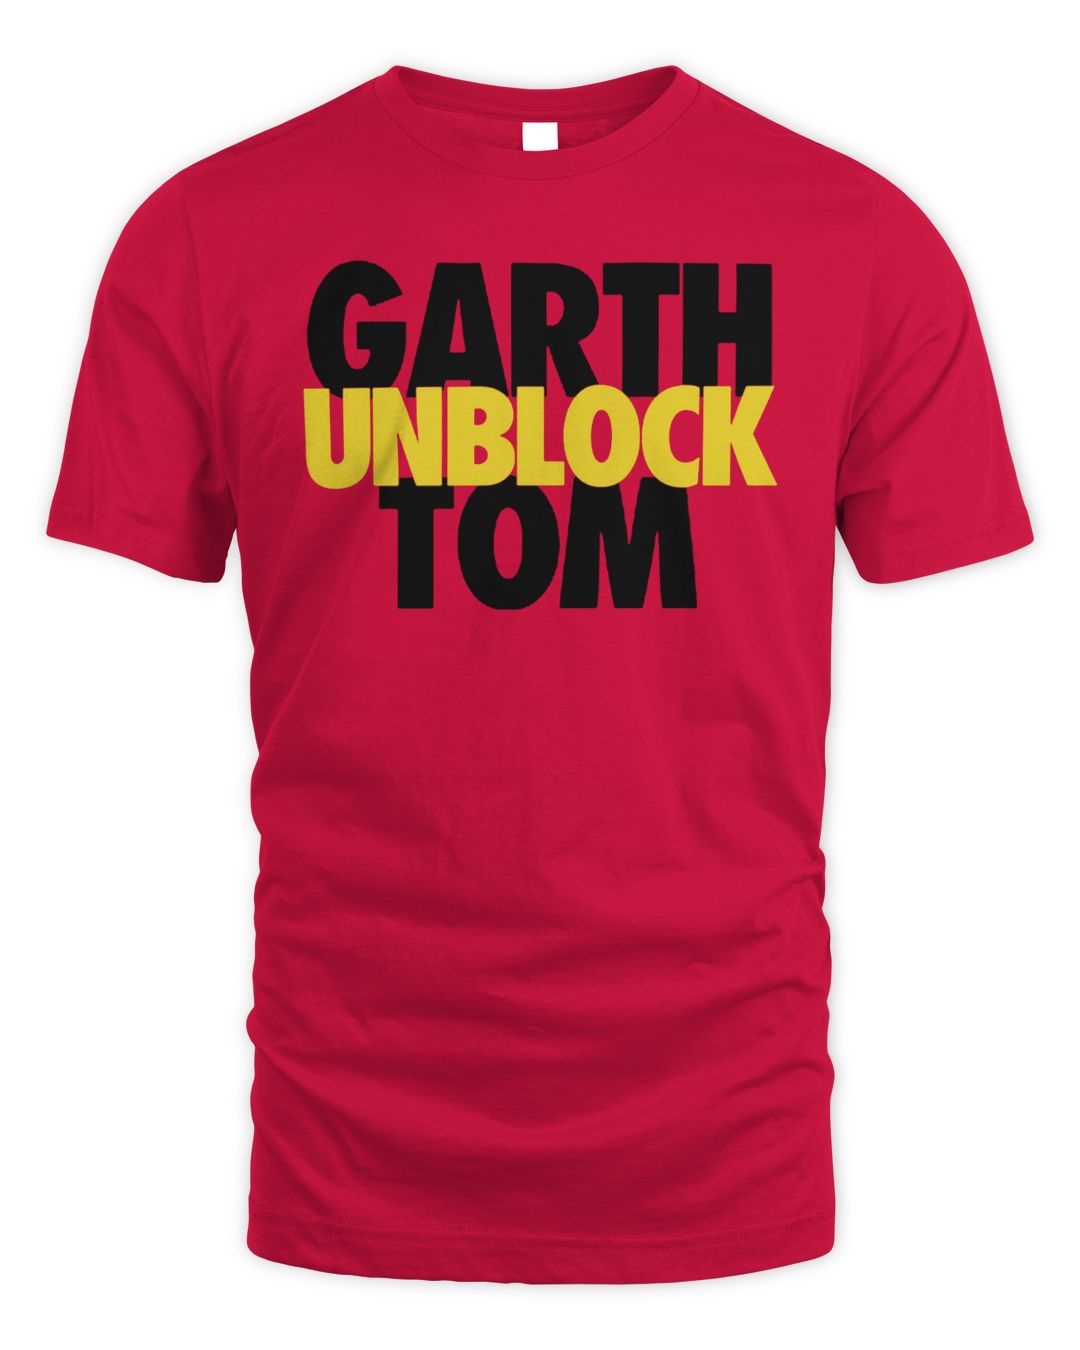 Ymh Merch Garth Unblock Tom Shirt